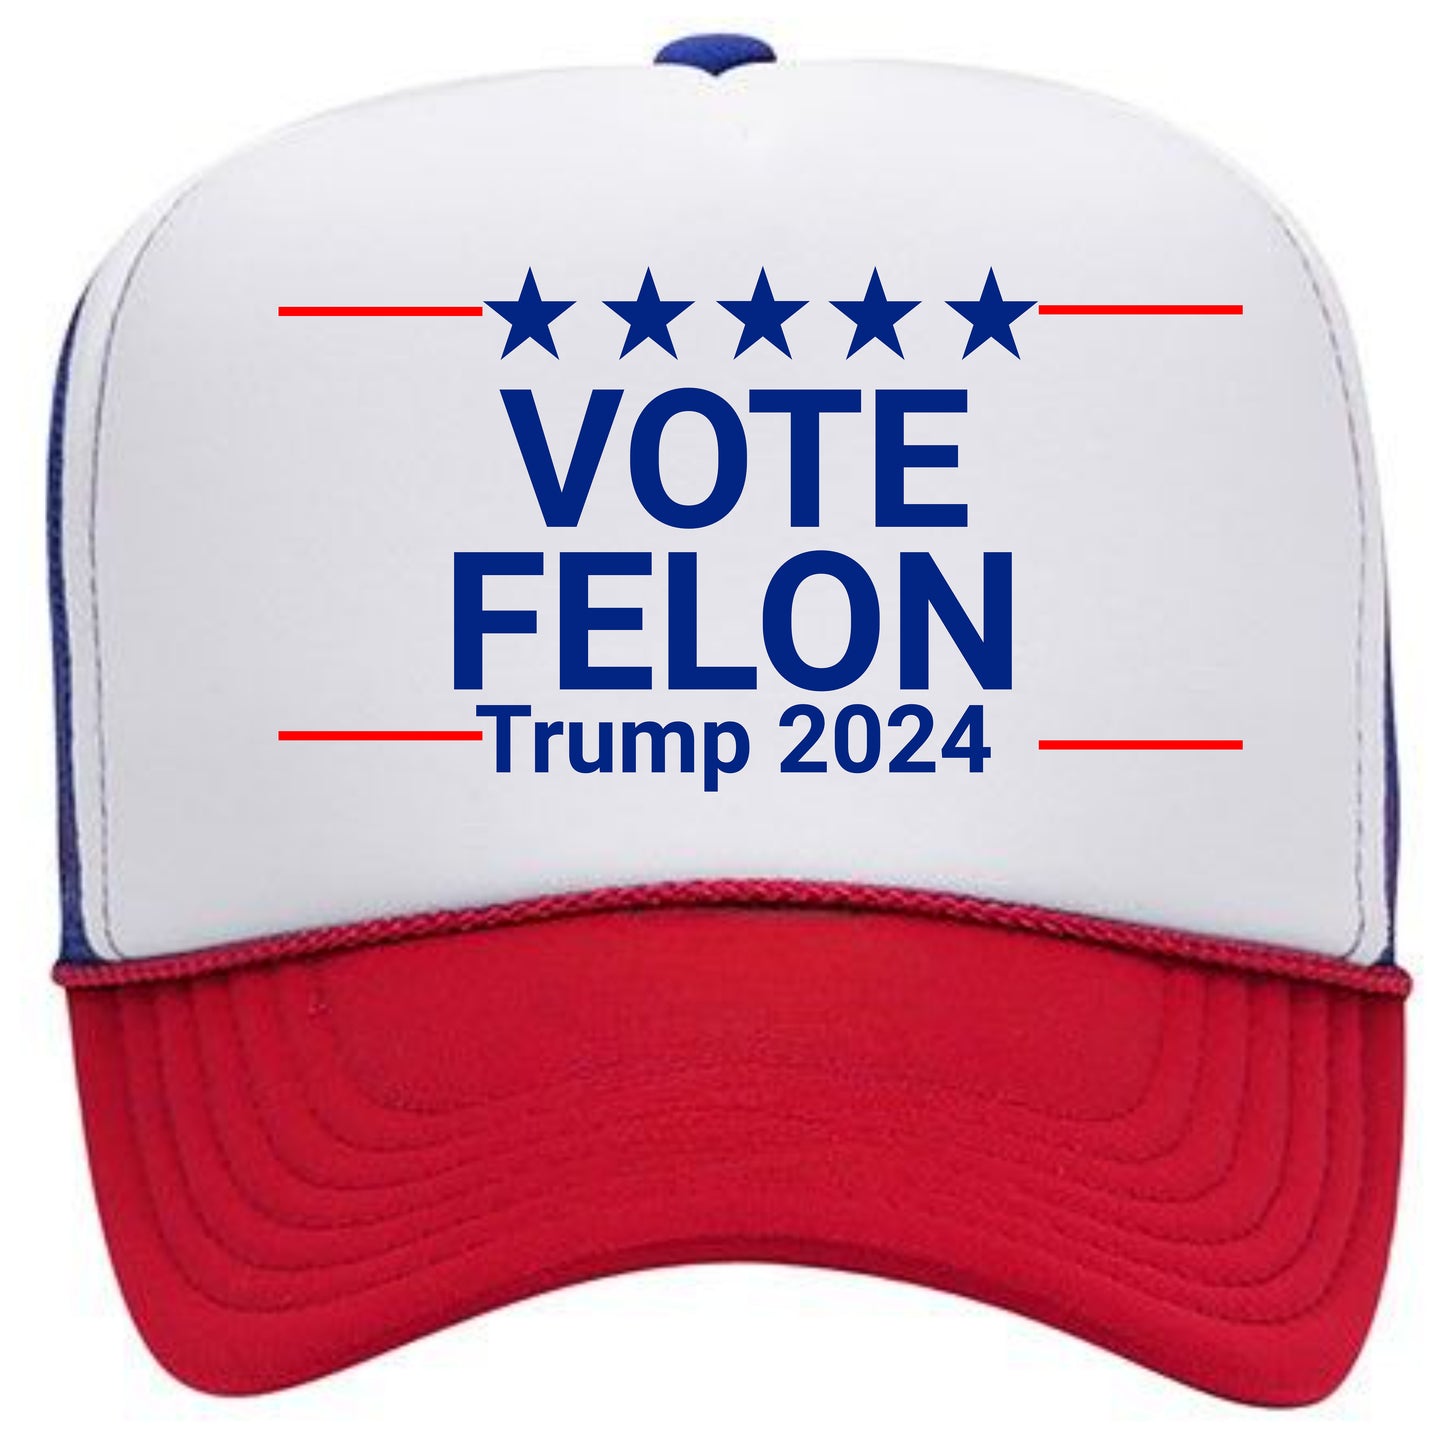 MAGA Trump 2024 Vote Felon Foam Mesh Trucker Snapback Red, White and Blue